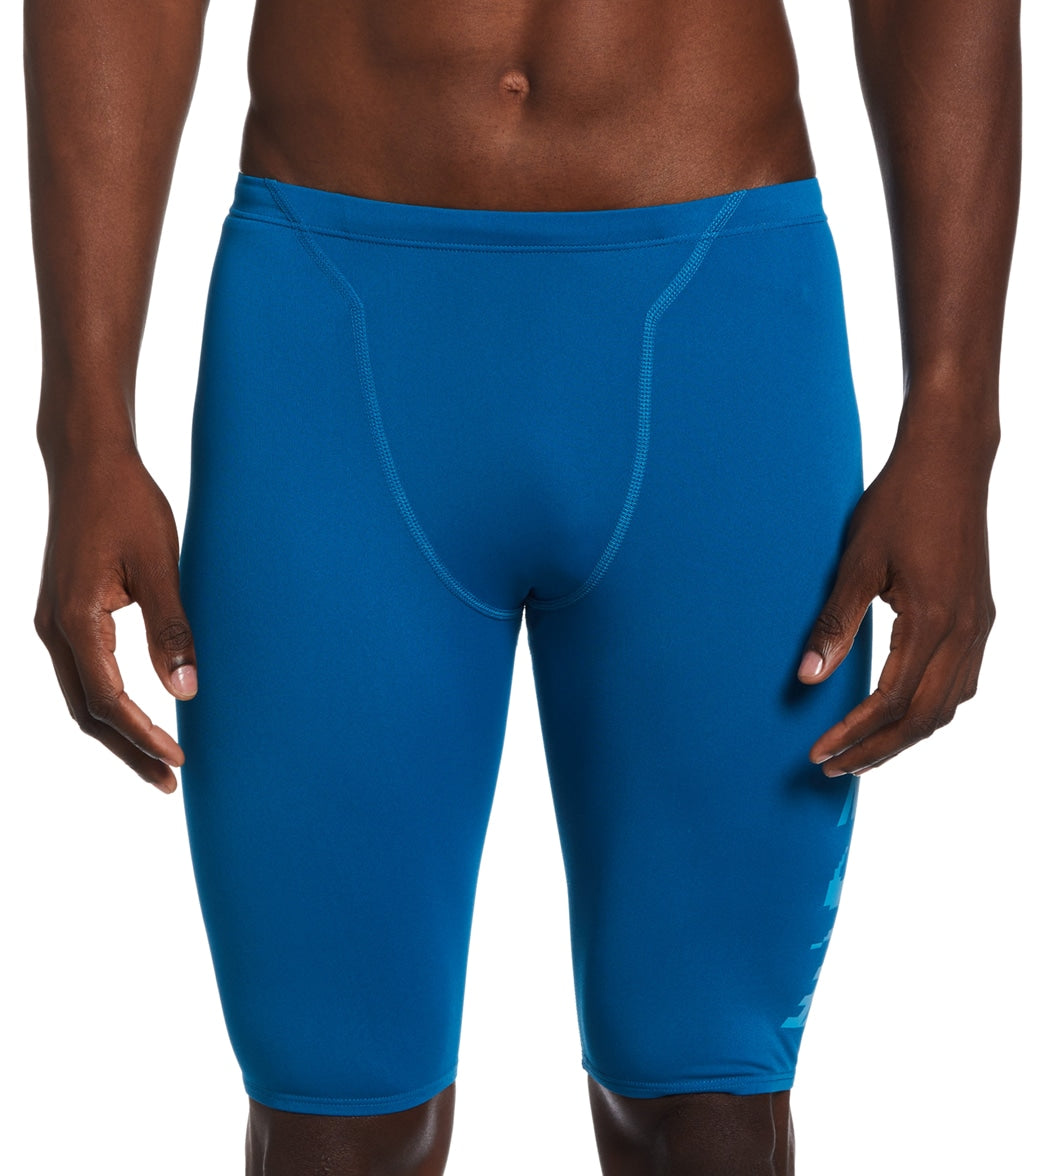 Camino desnudo giratorio Nike Men's HydraStrong Multi Graphic Jammer Swimsuit at SwimOutlet.com